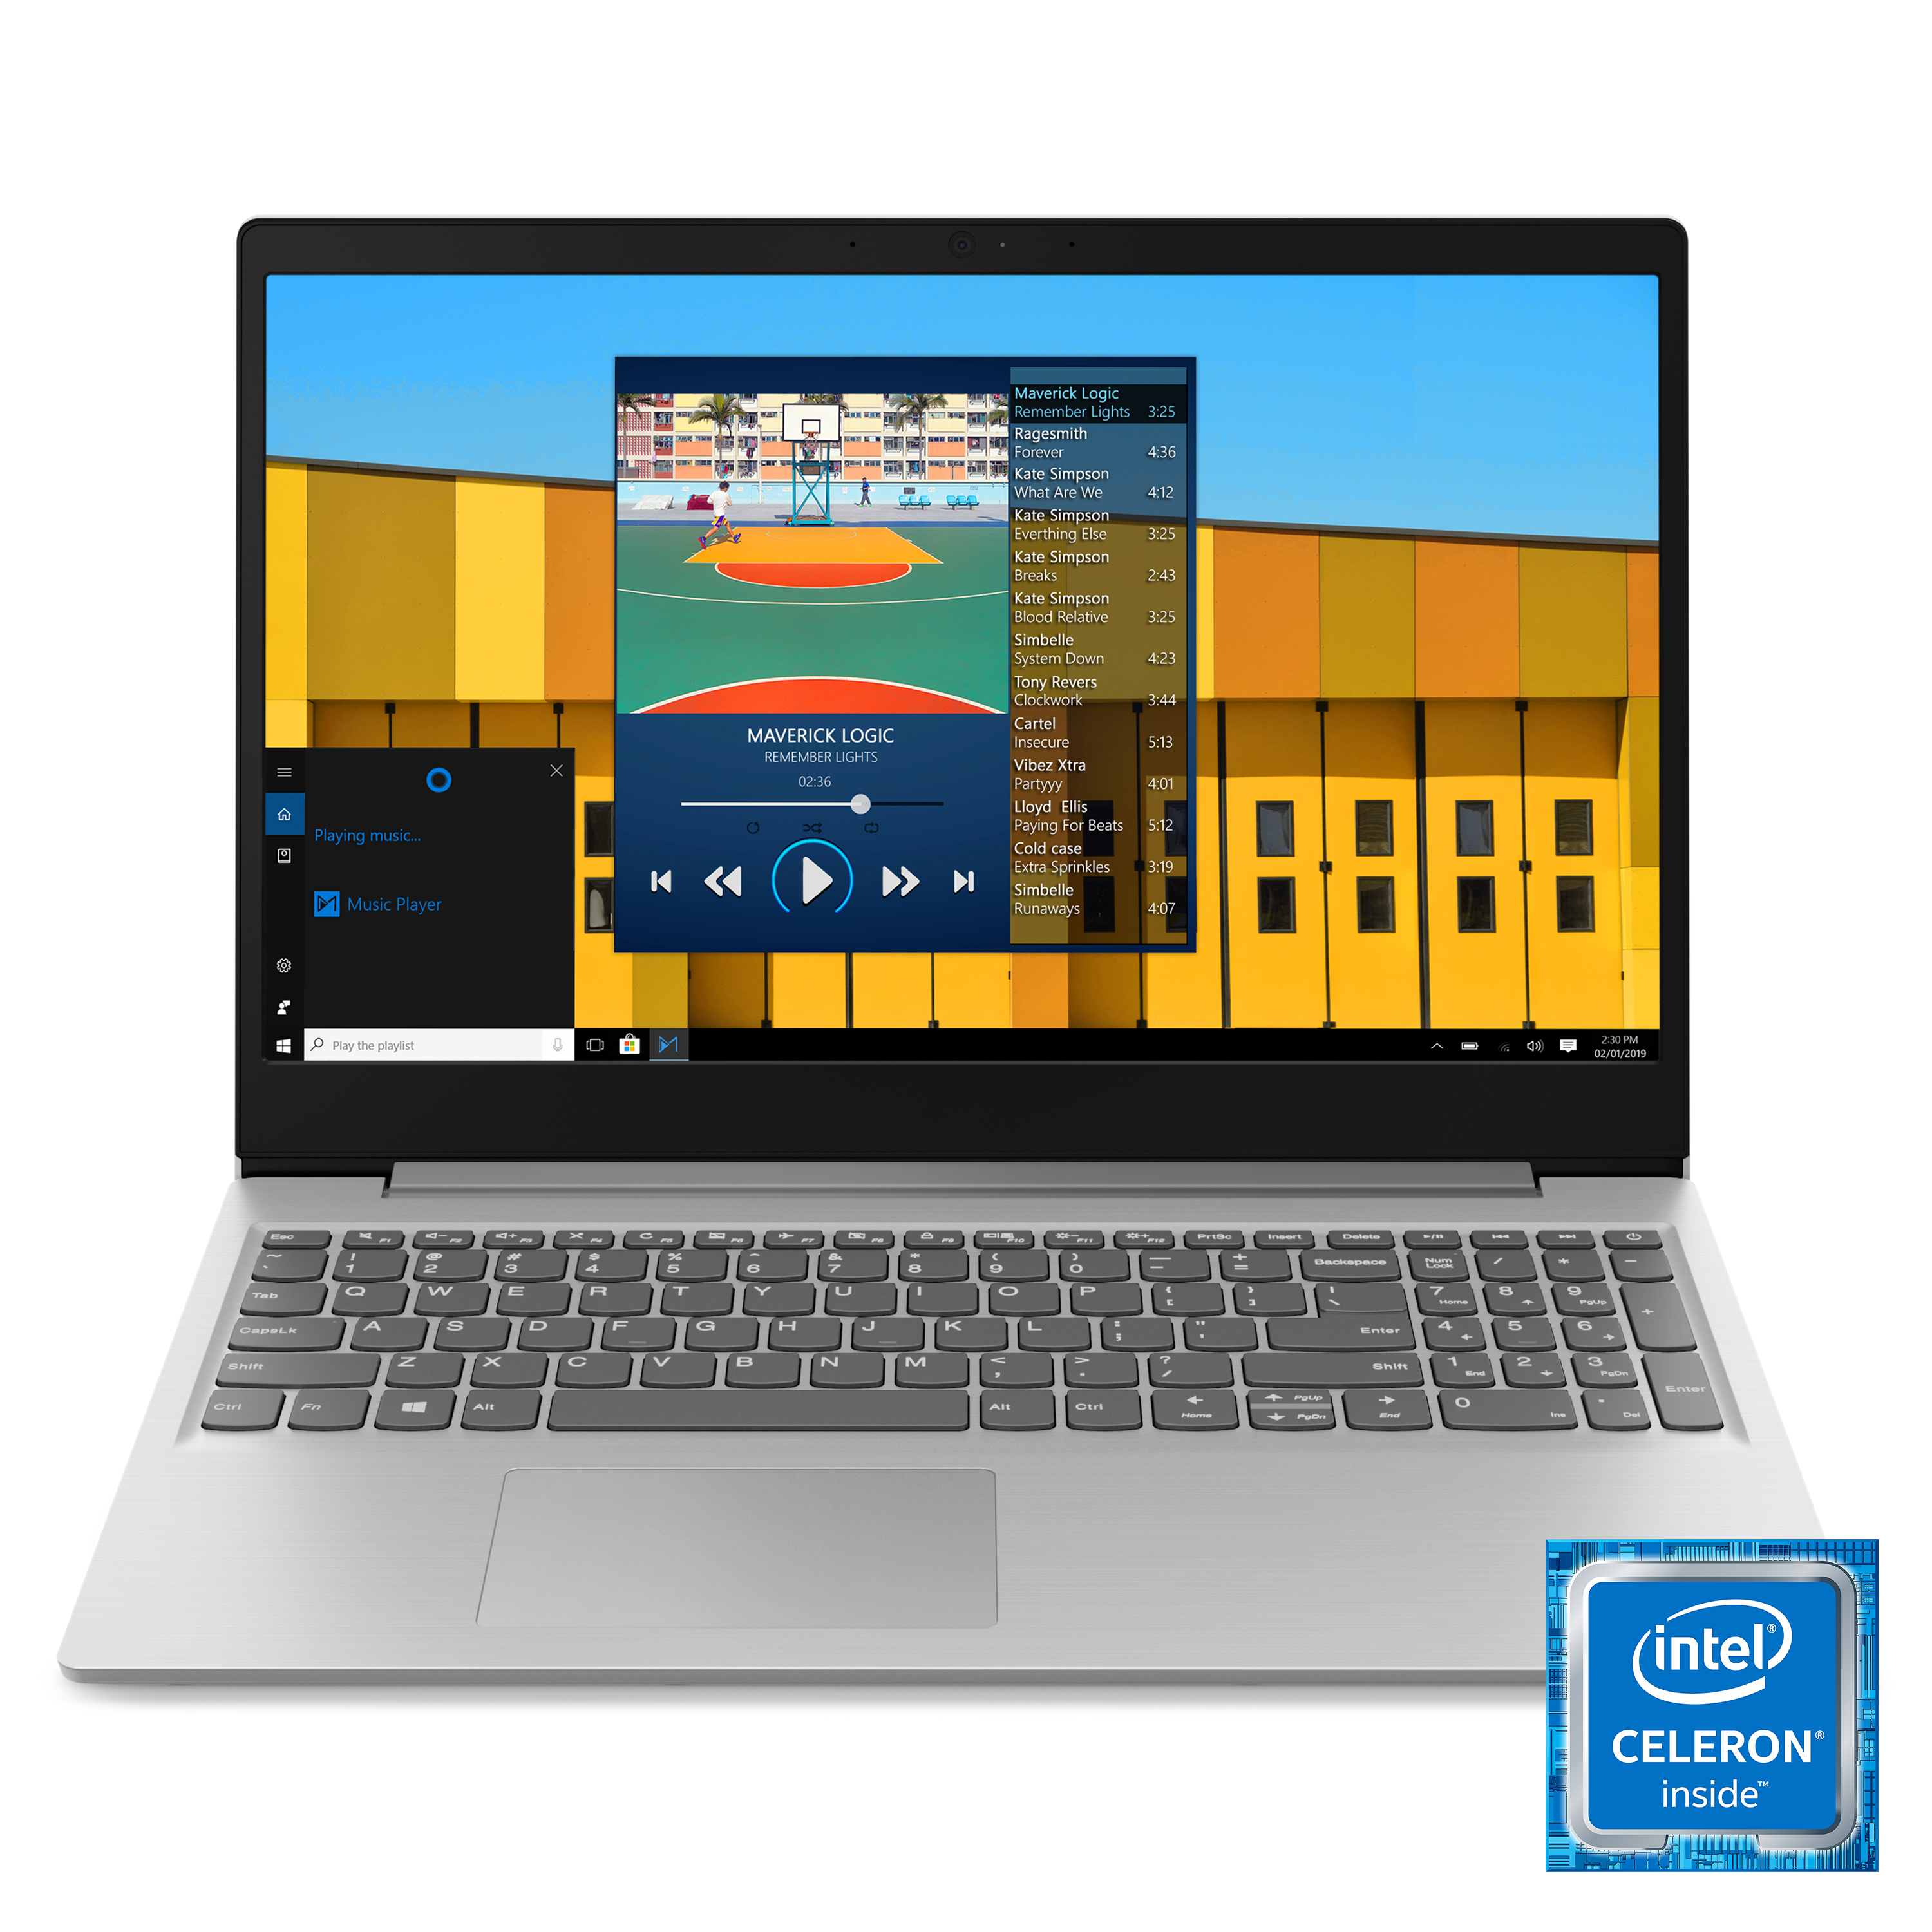 Lenovo ideapad S145 15.6" Laptop, Intel Celeron 4205U Dual-Core Processor, 4GB Memory, 128GB Solid State Drive, Windows 10 - Grey - 81MV00FGUS - image 1 of 17